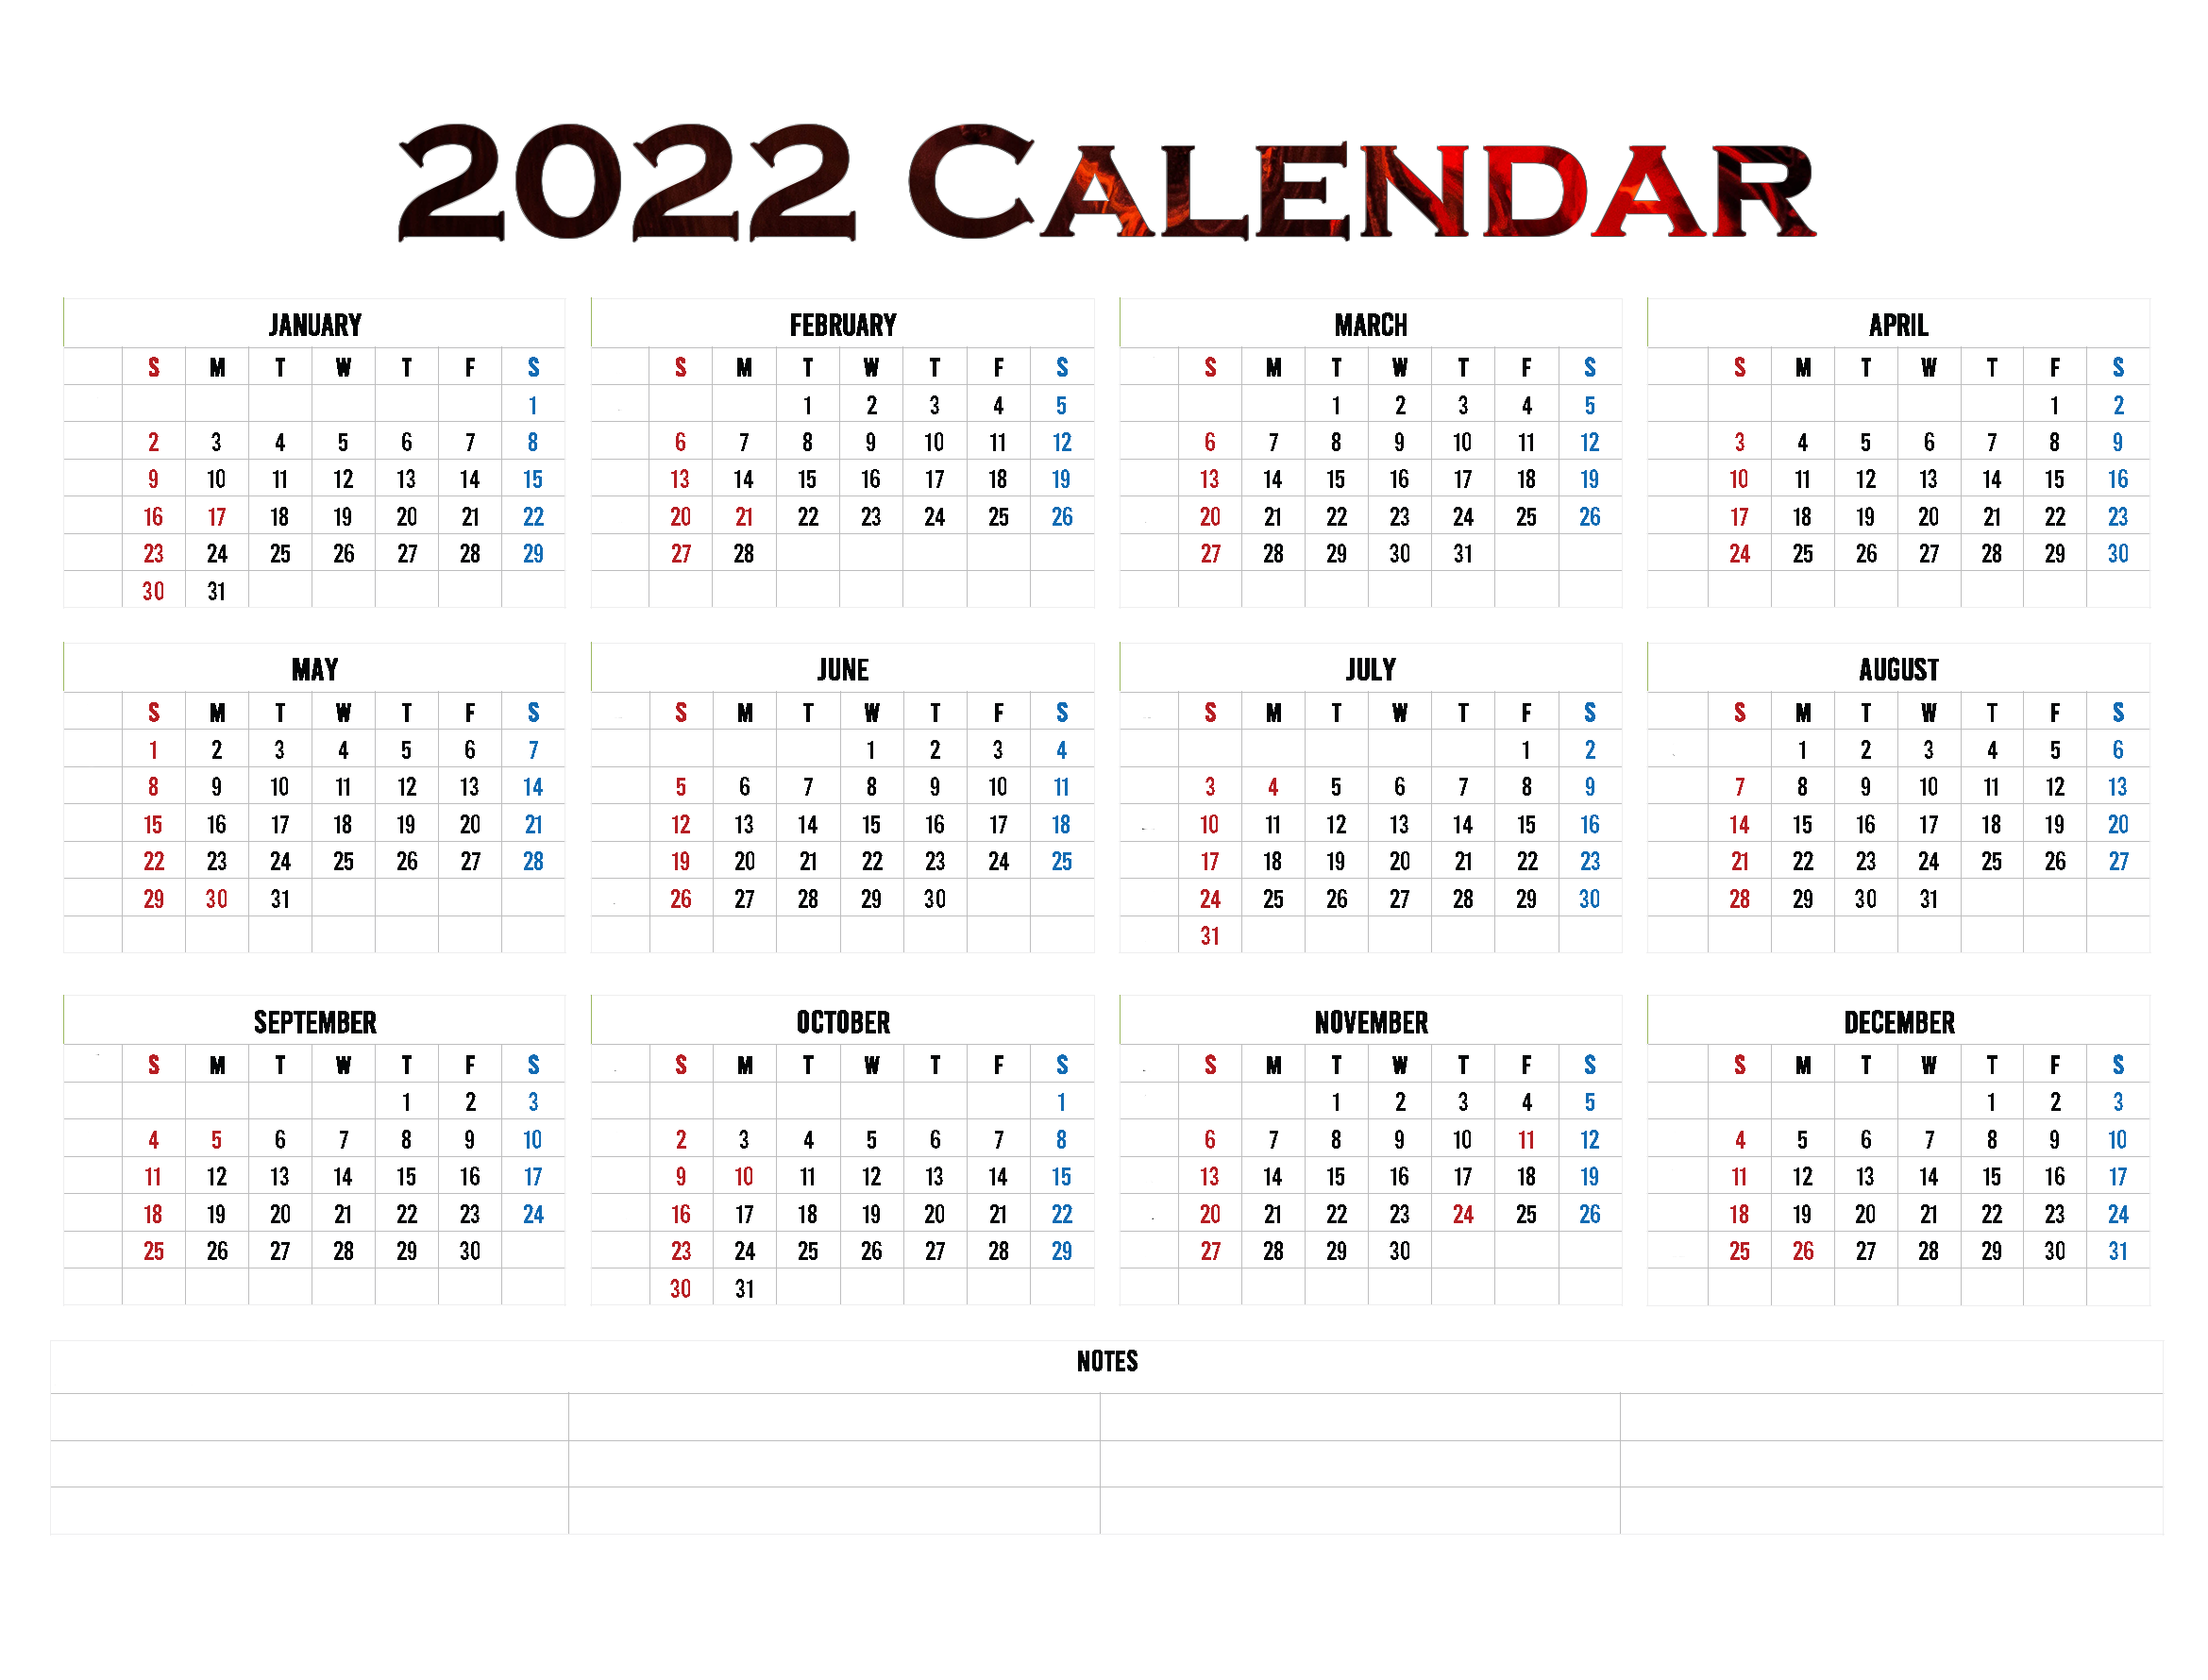 Kalender 2022